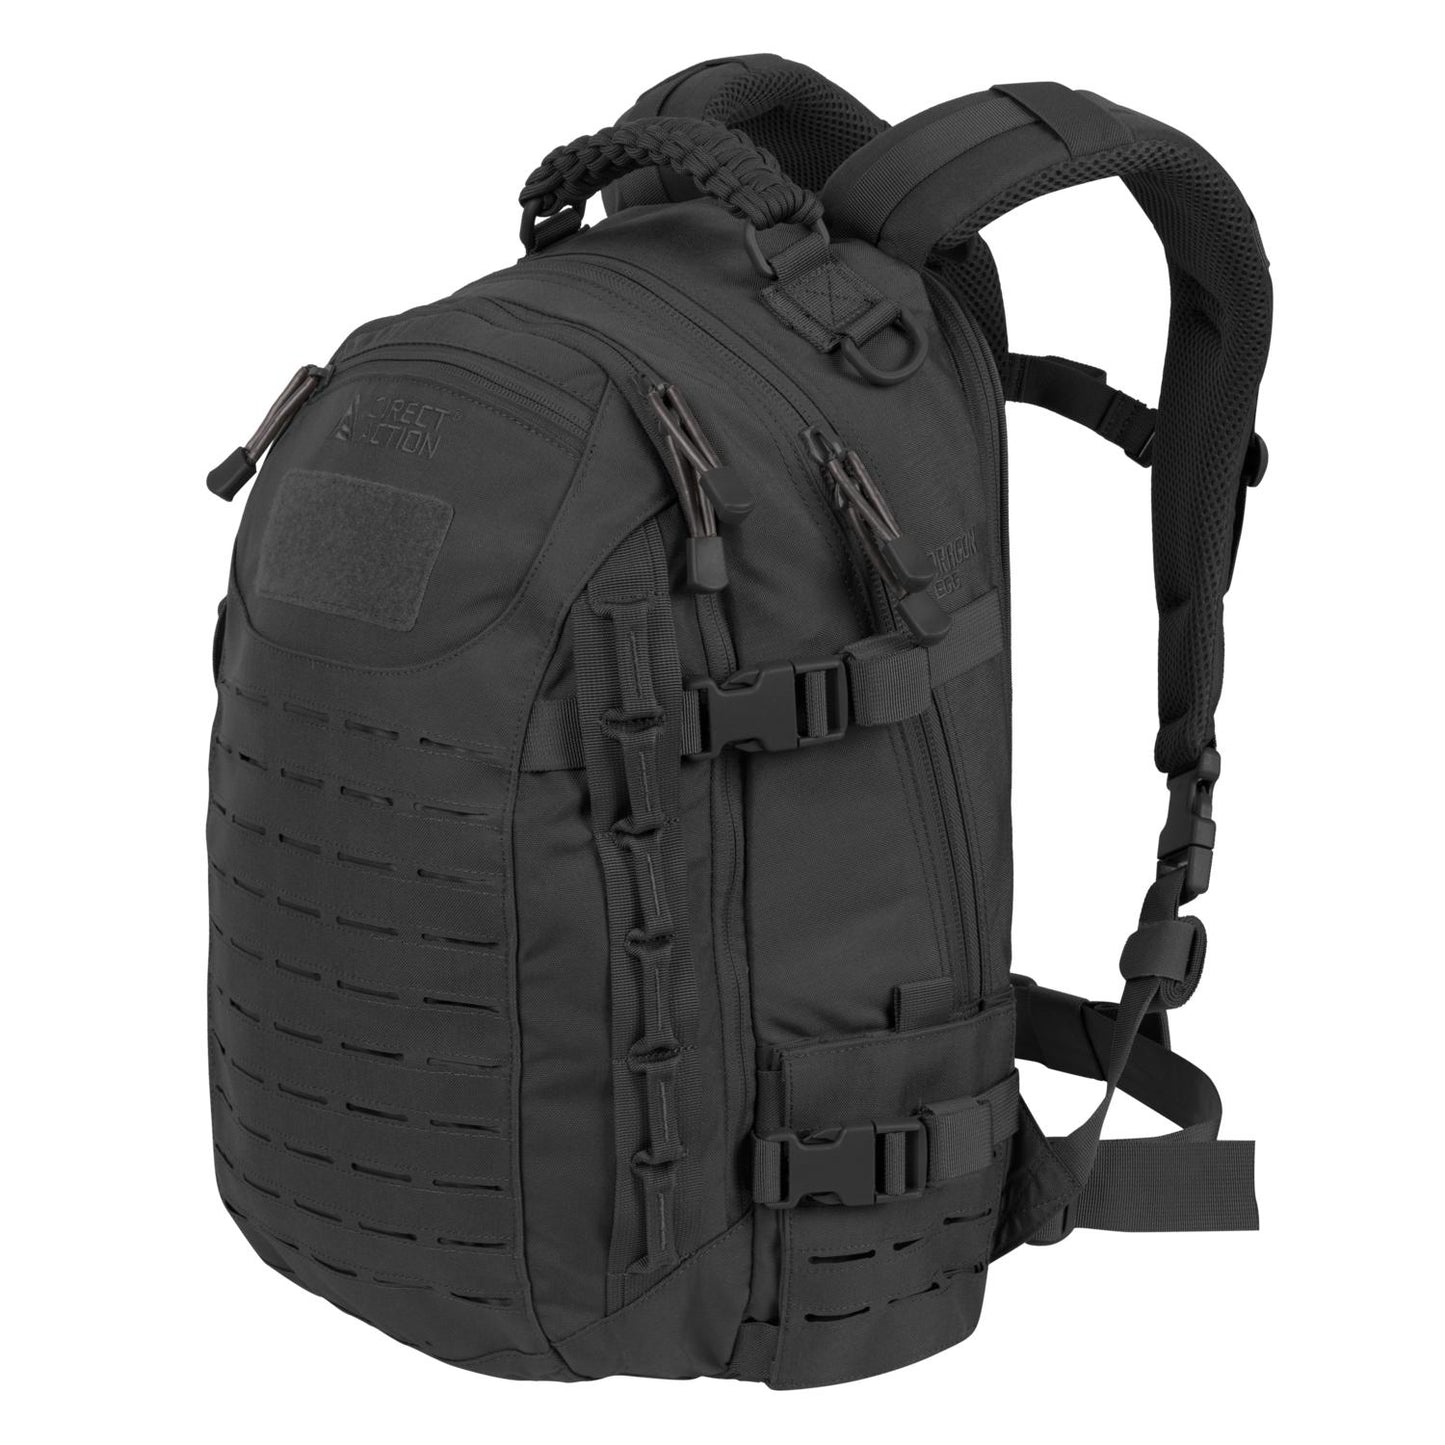 Dragon Egg® MKII Modular Military Backpack